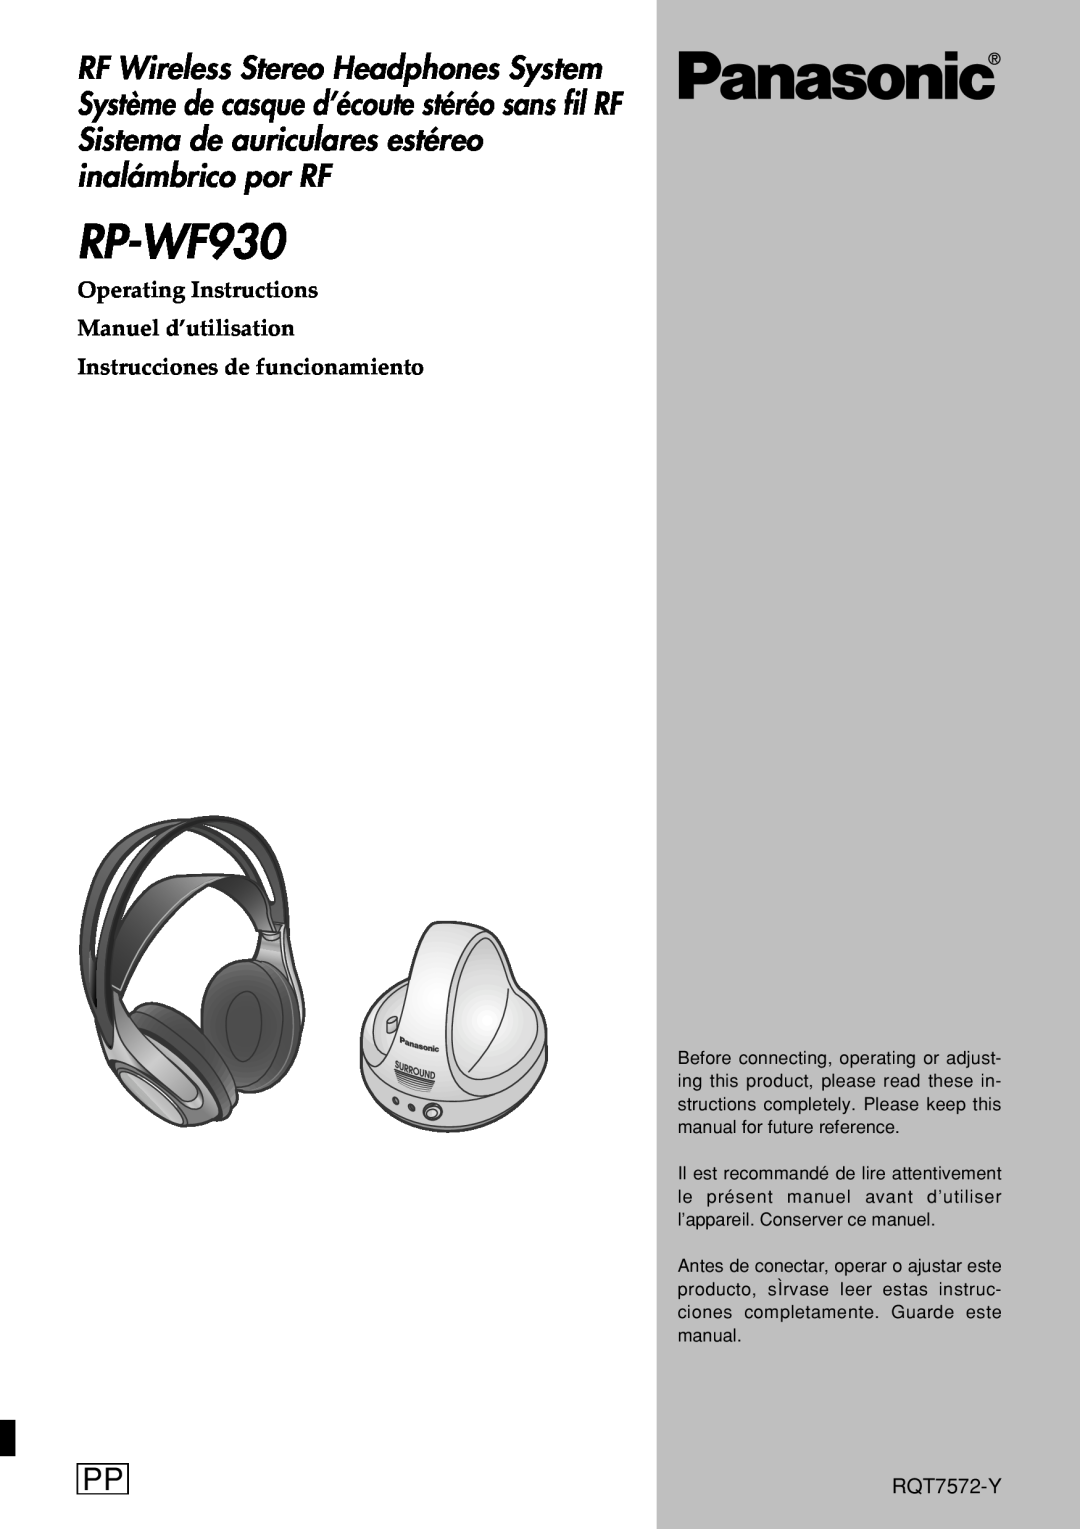 Panasonic RP-WF930 operating instructions RQT7572-Y, Operating Instructions Manuel d’utilisation 